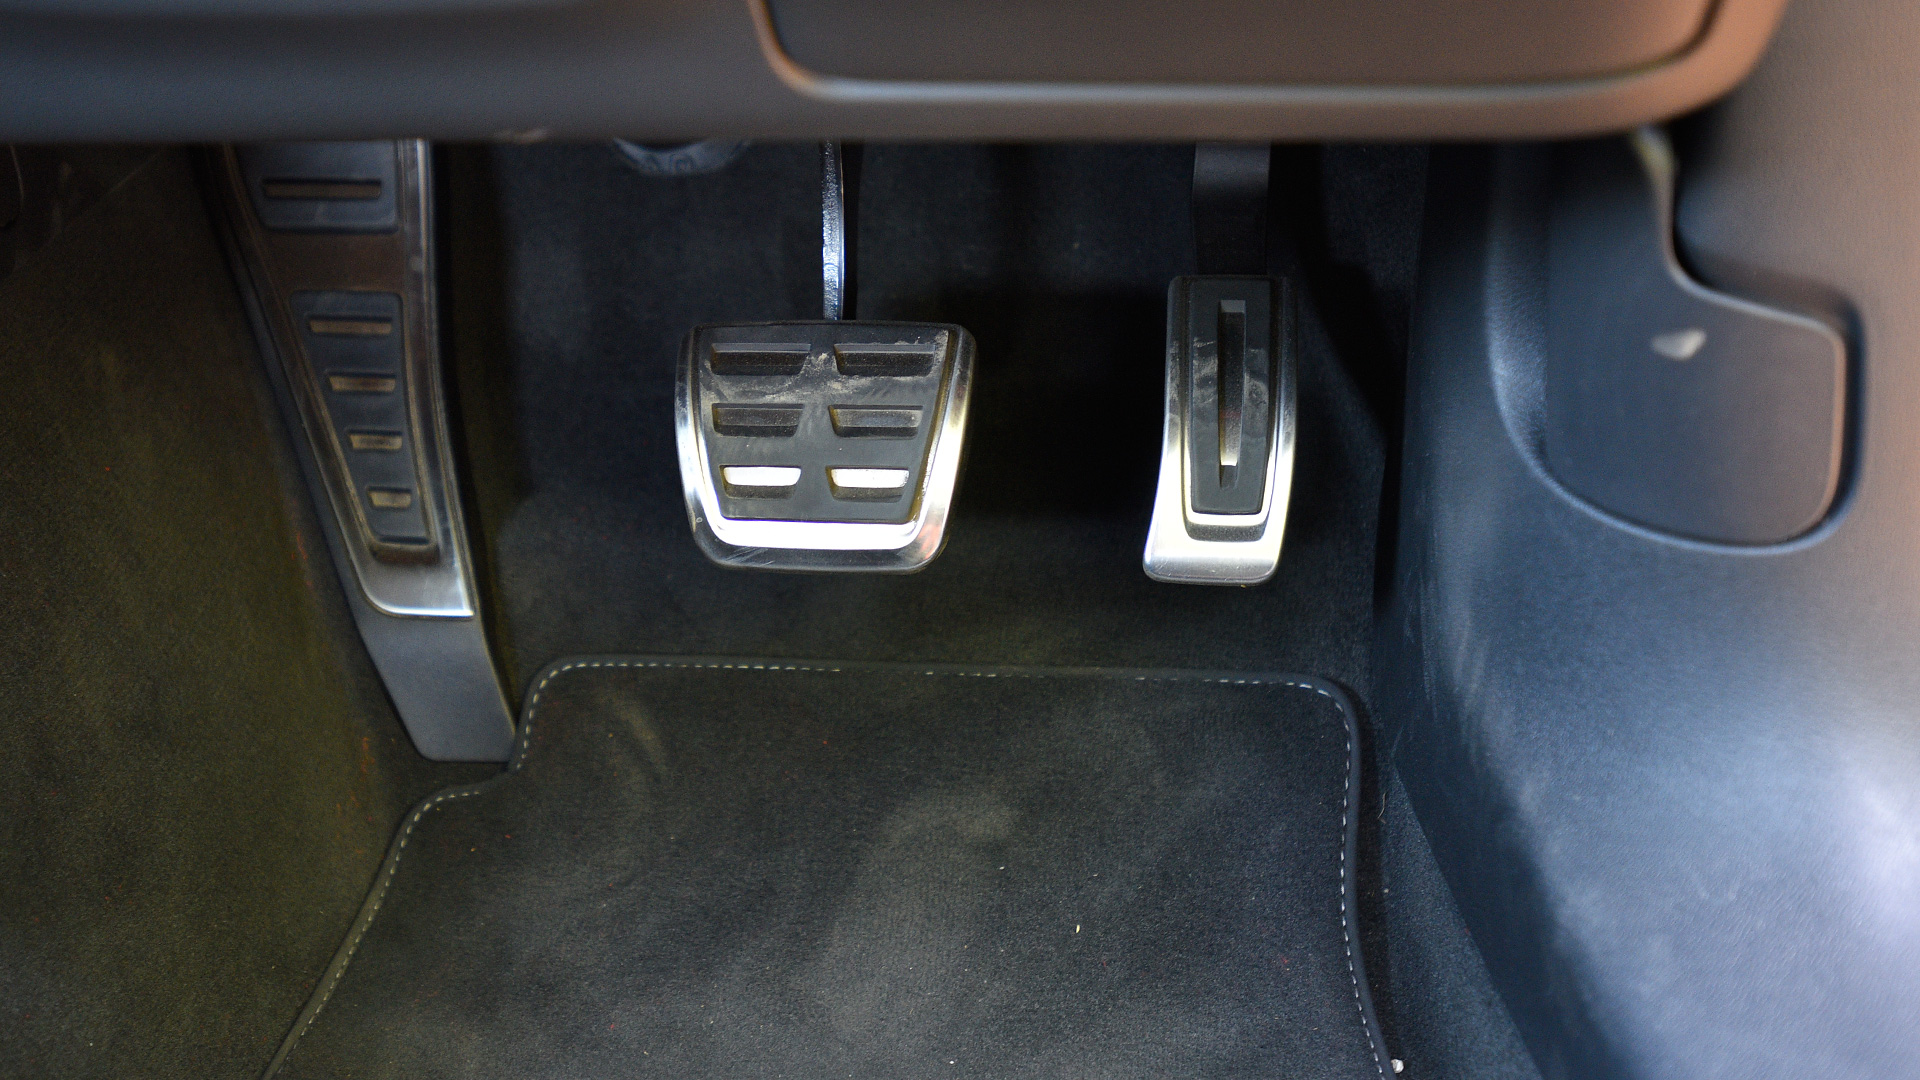 Audi RS 5 2018 STD Interior